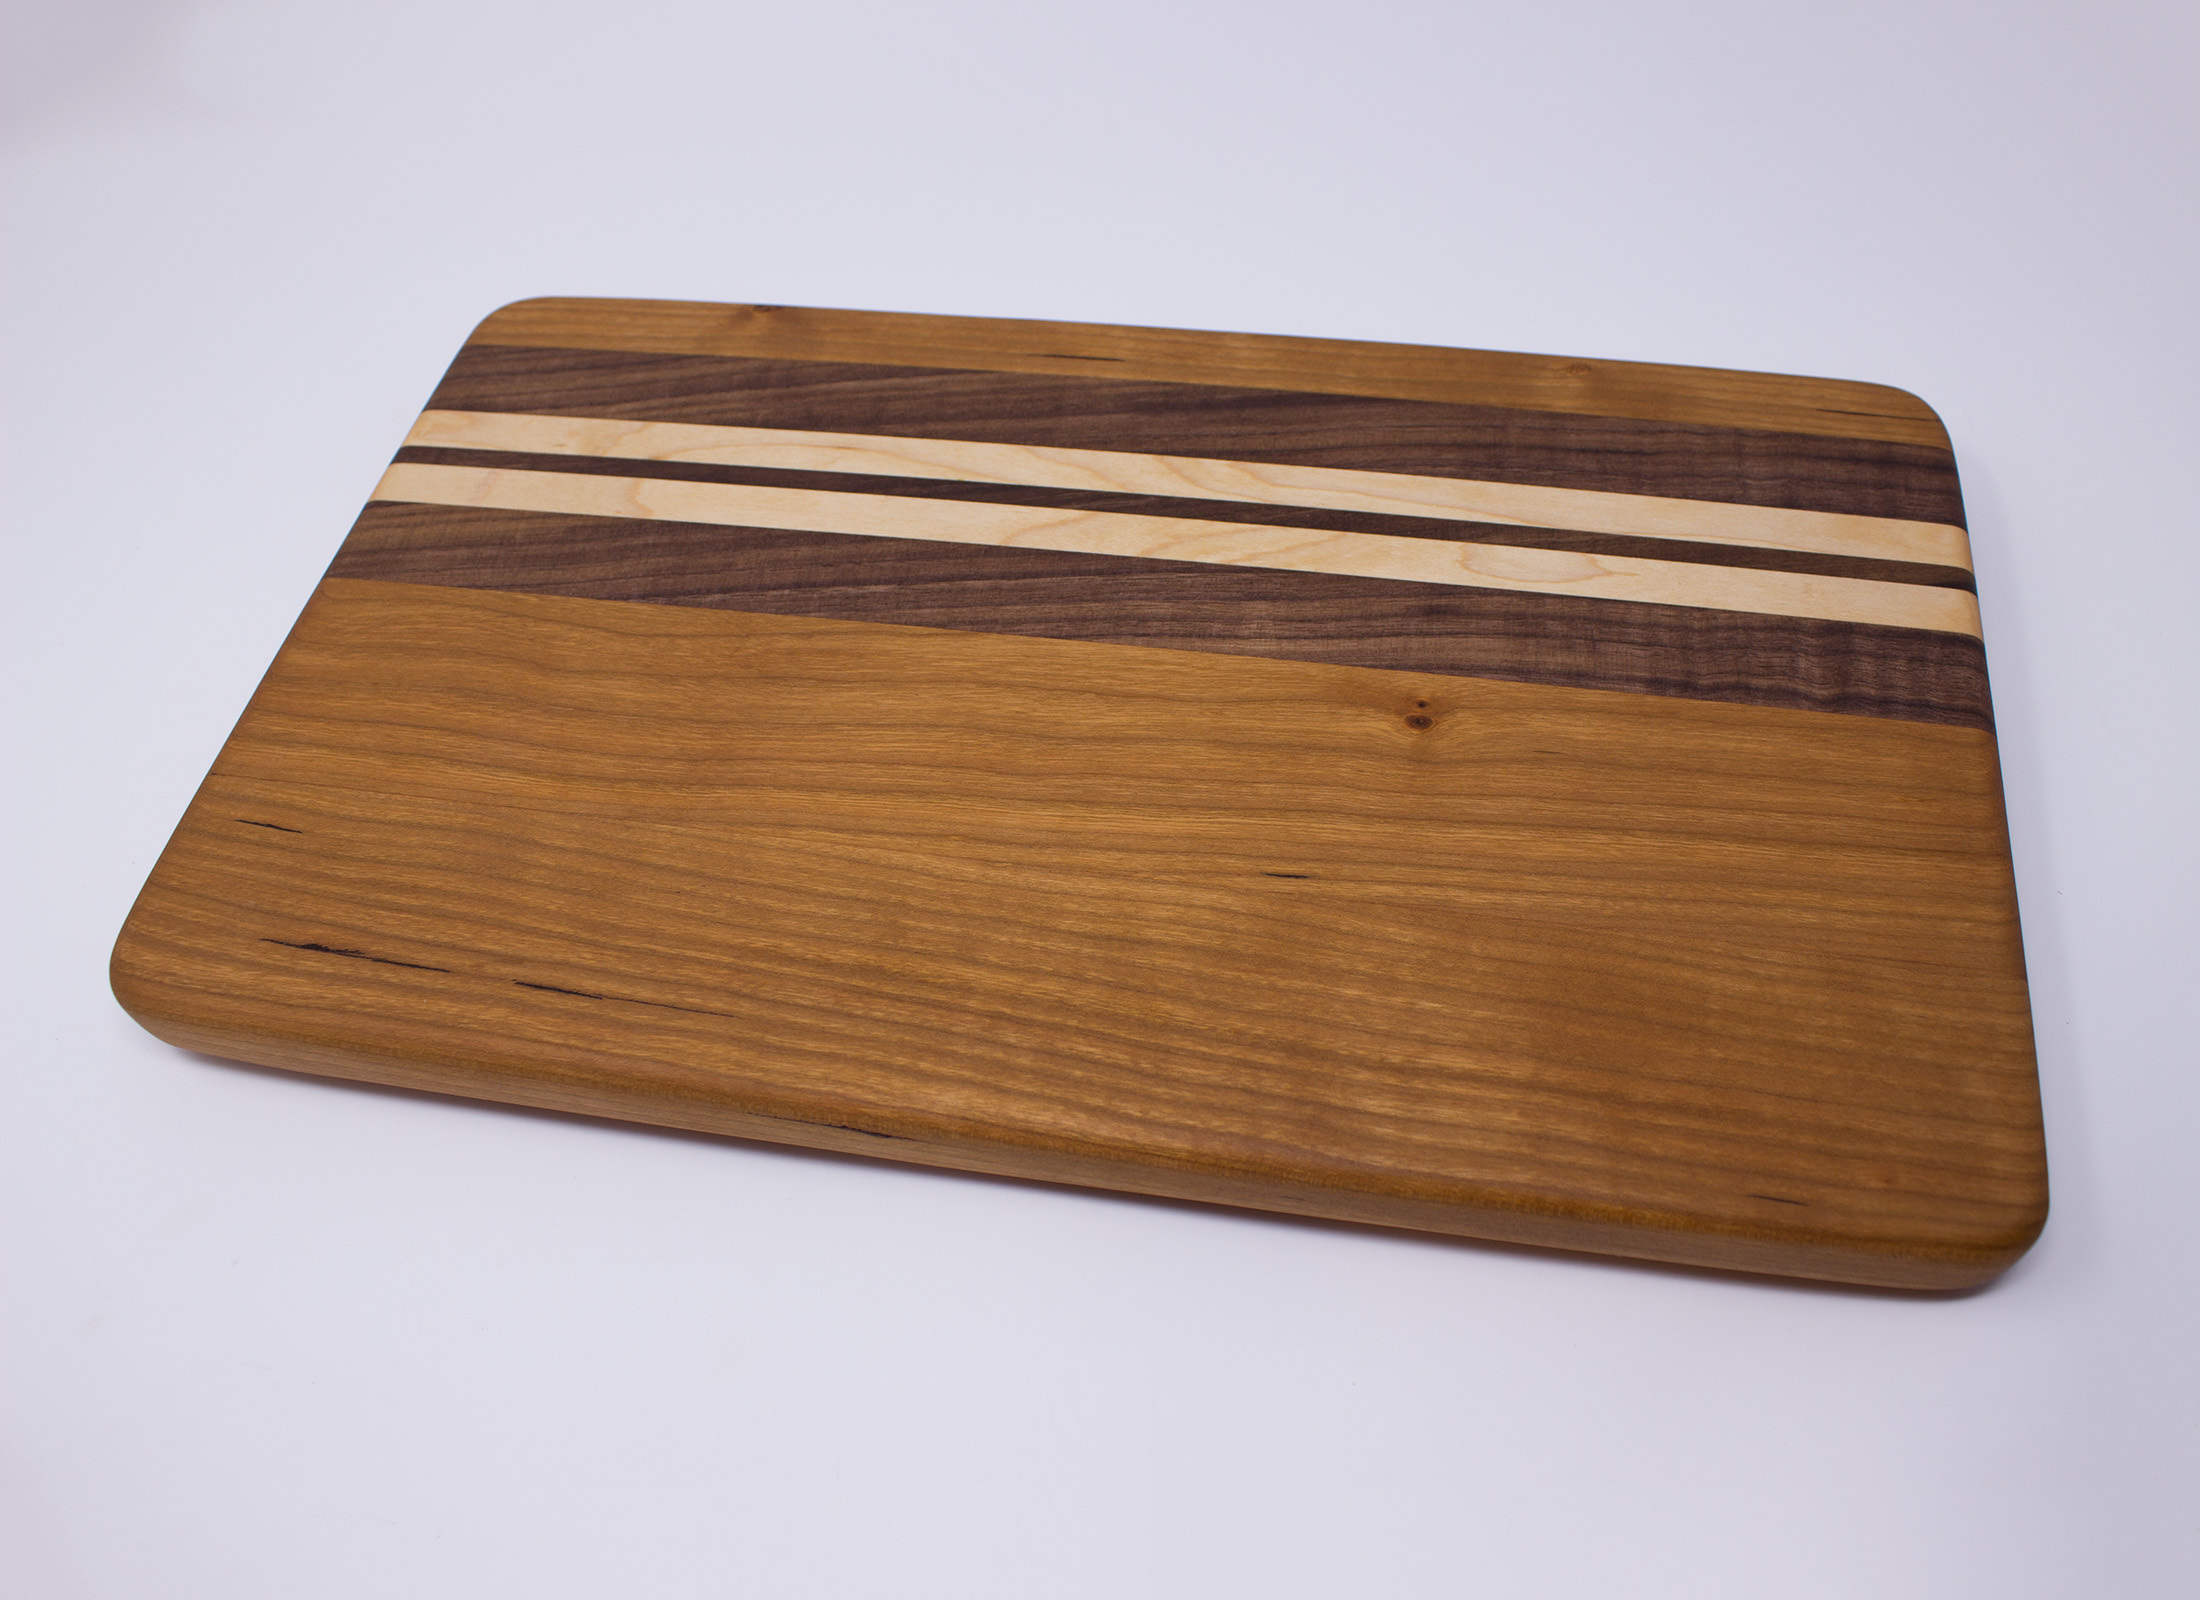 Classic Cutting Board Kit - Maple, Cherry & Walnut - Woodworkers